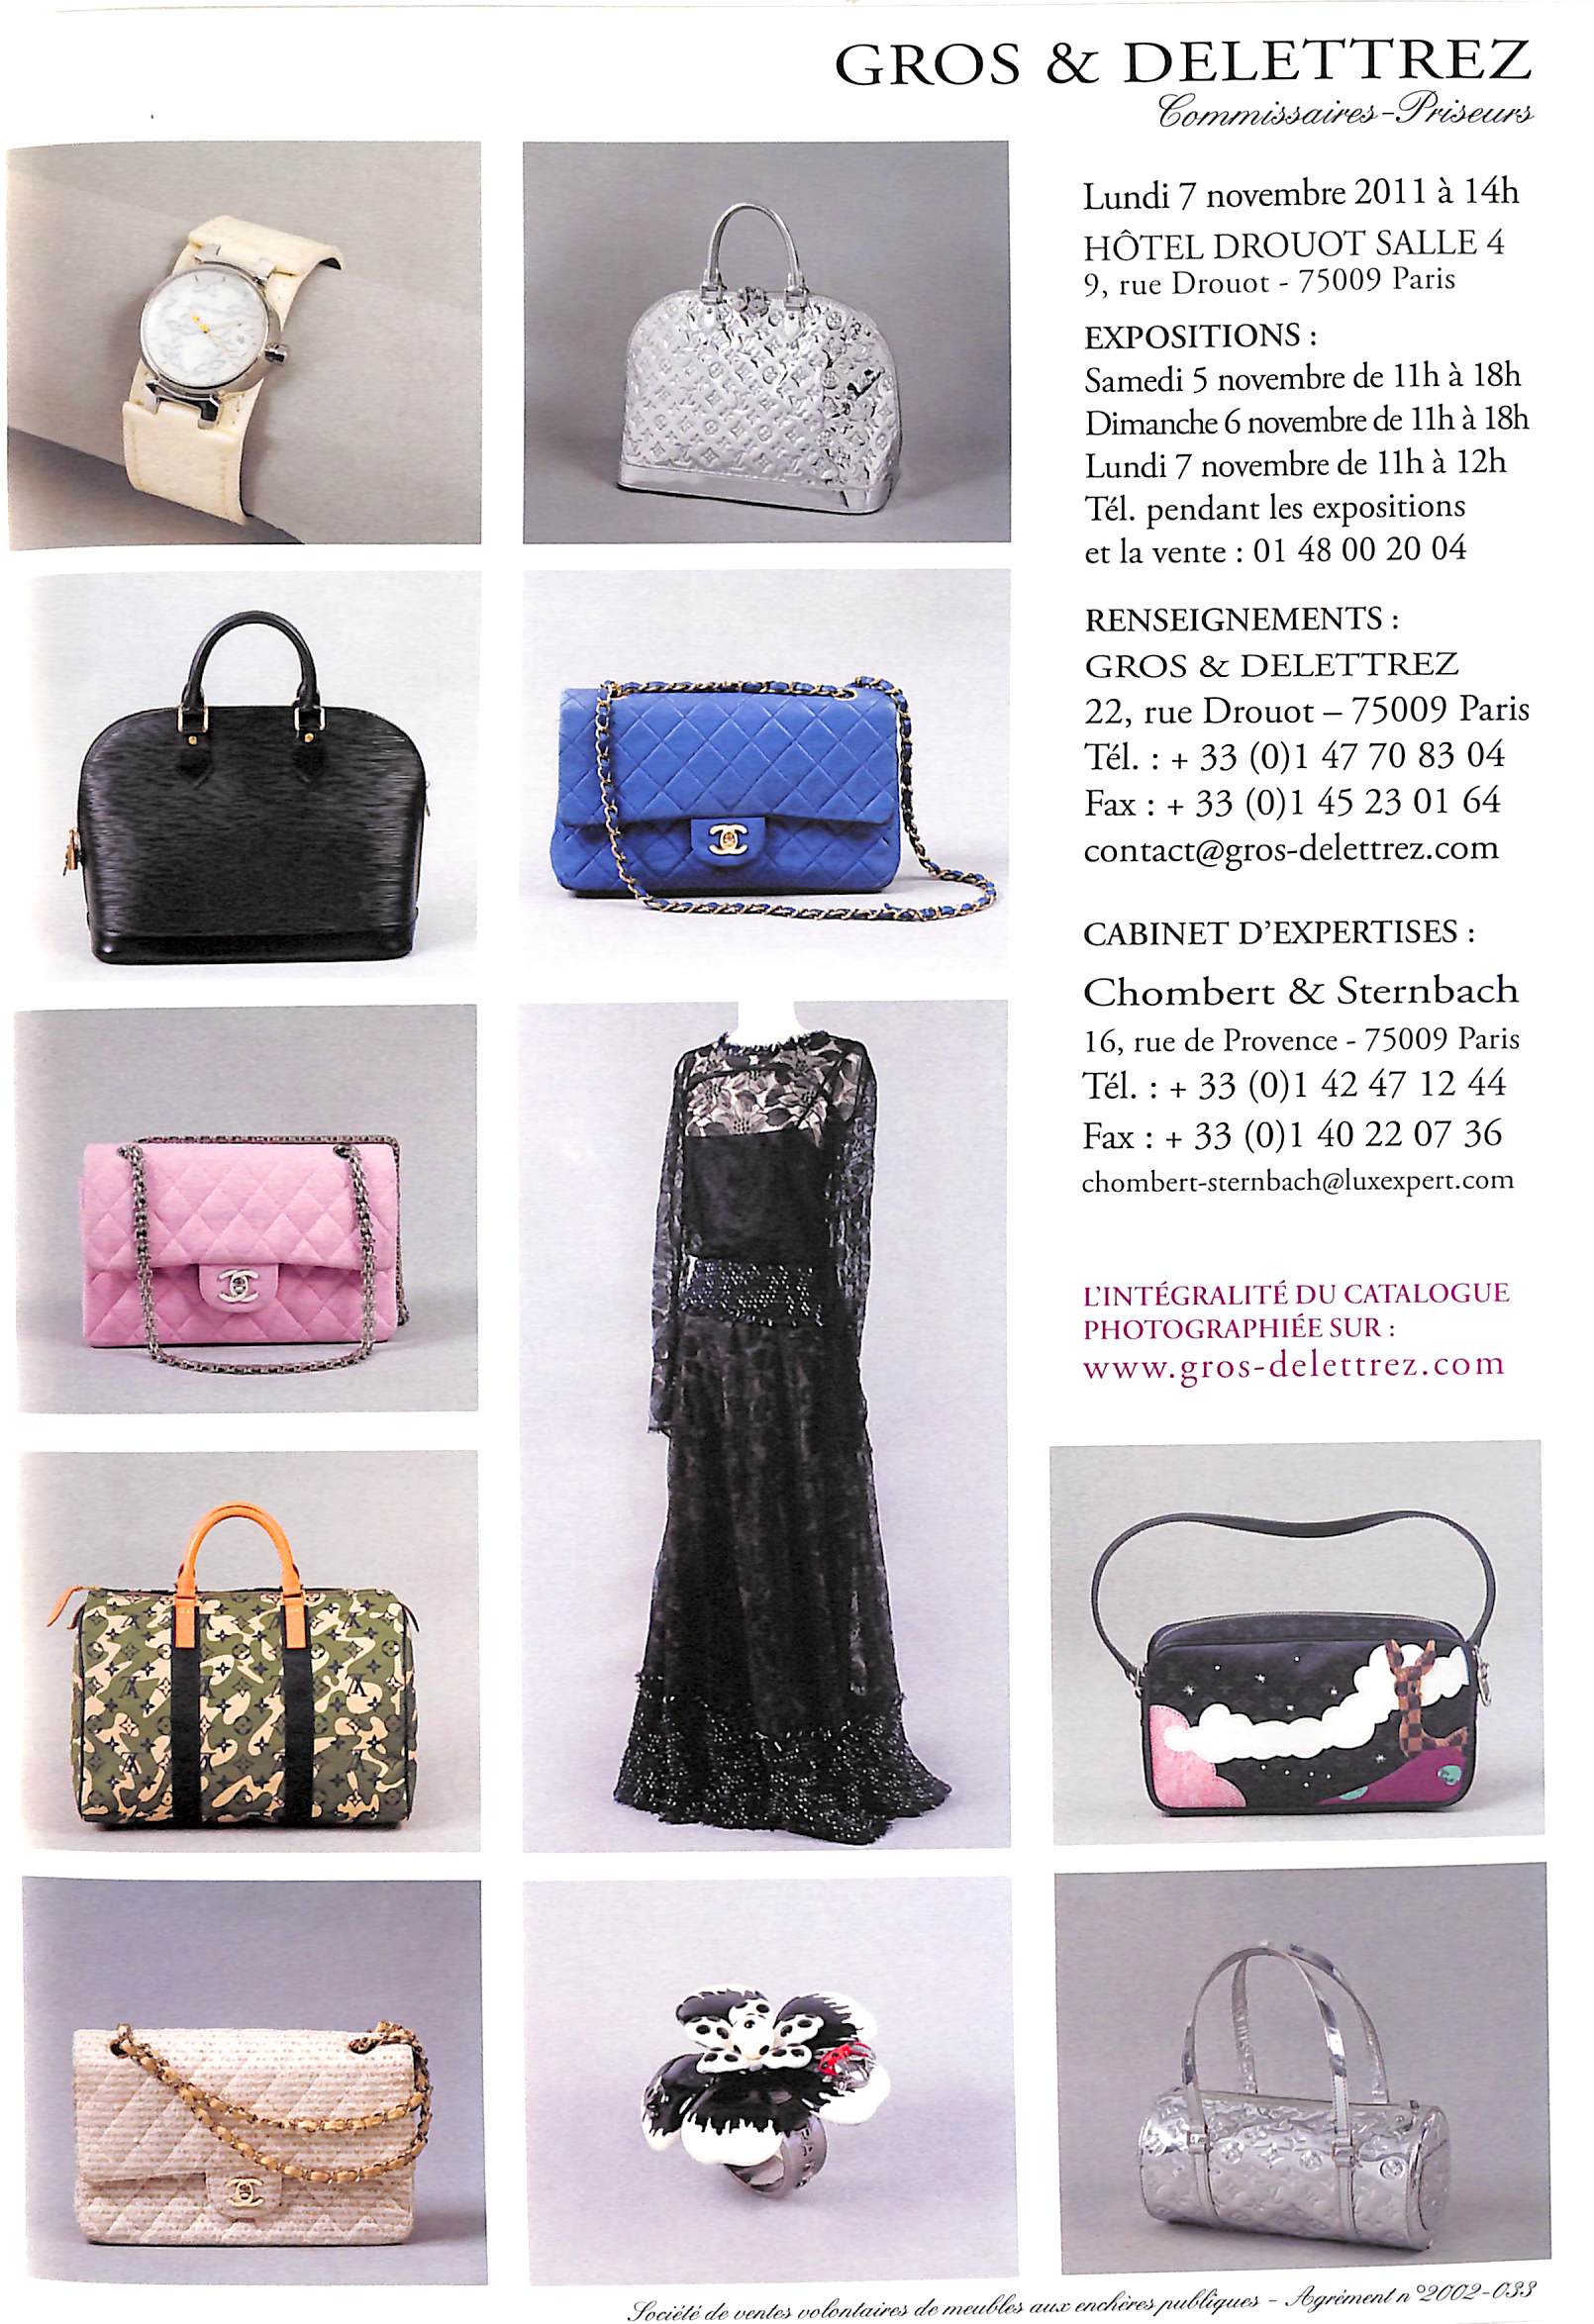 Chanel Handbag Auction